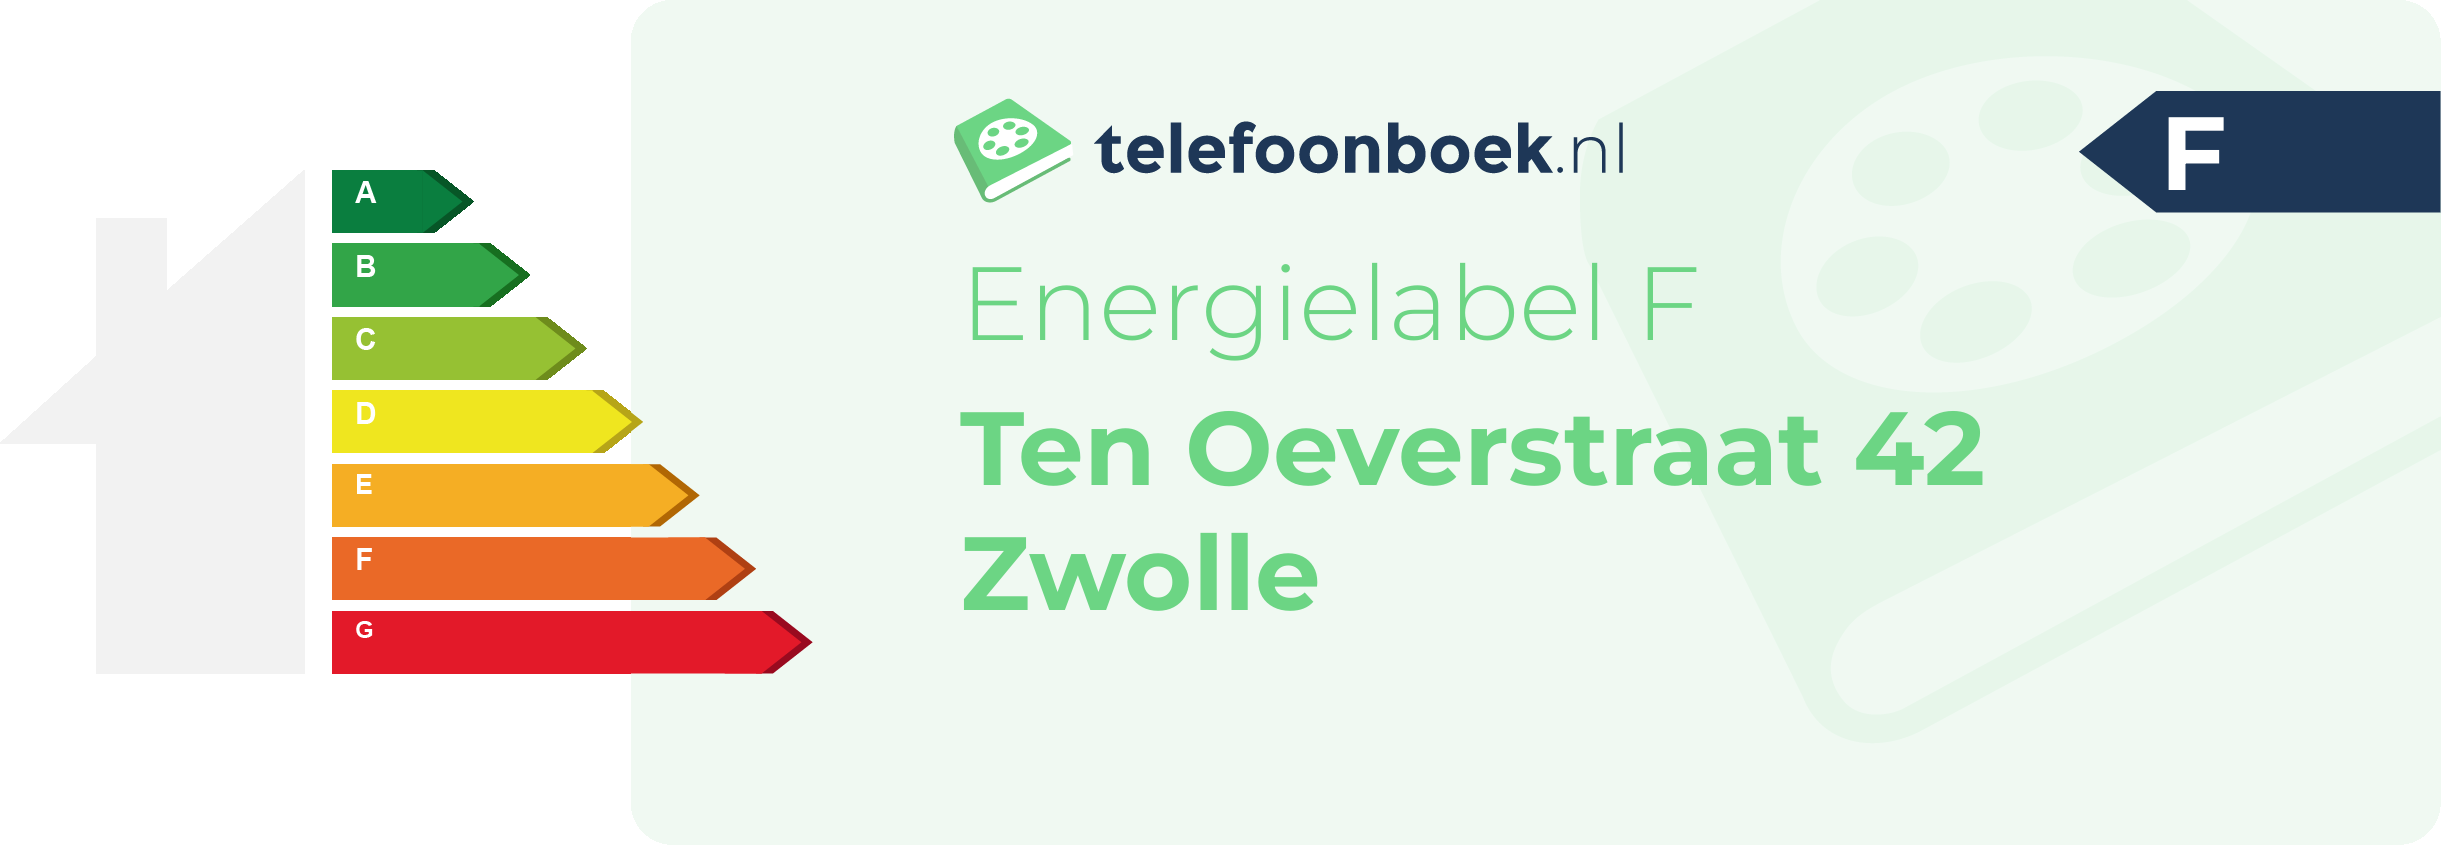 Energielabel Ten Oeverstraat 42 Zwolle